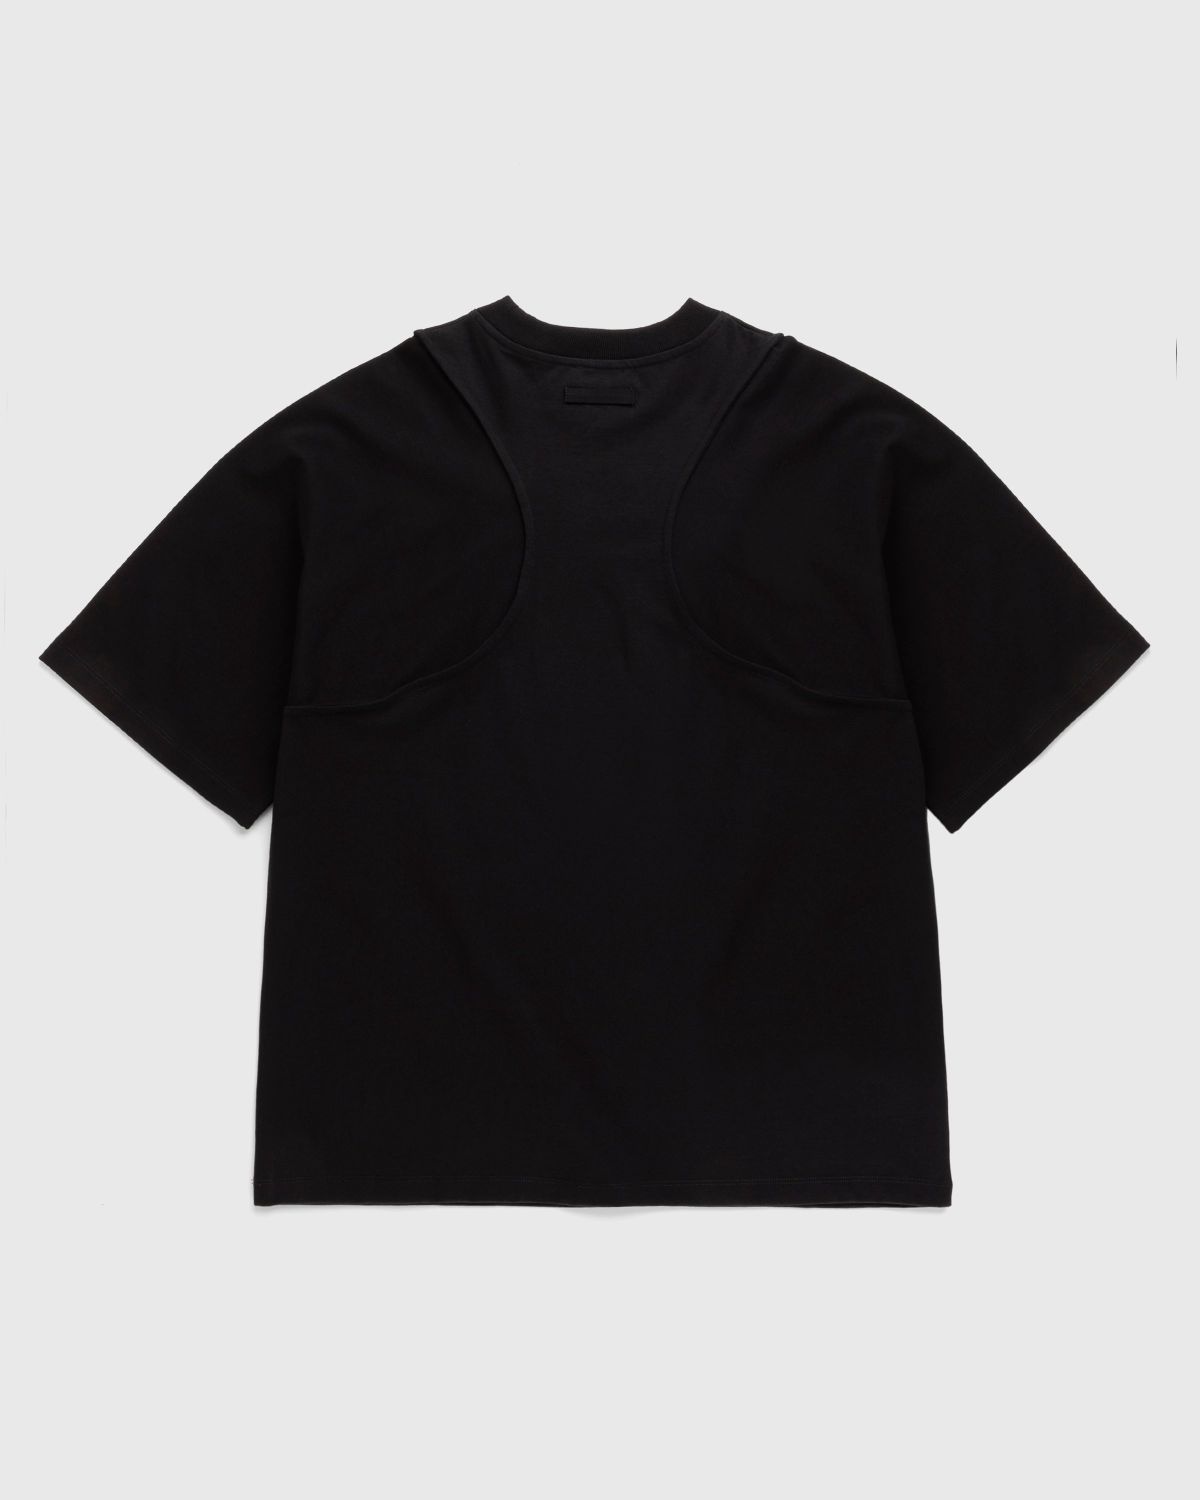 Jean Paul Gaultier – JPG T-Shirt Black - 2